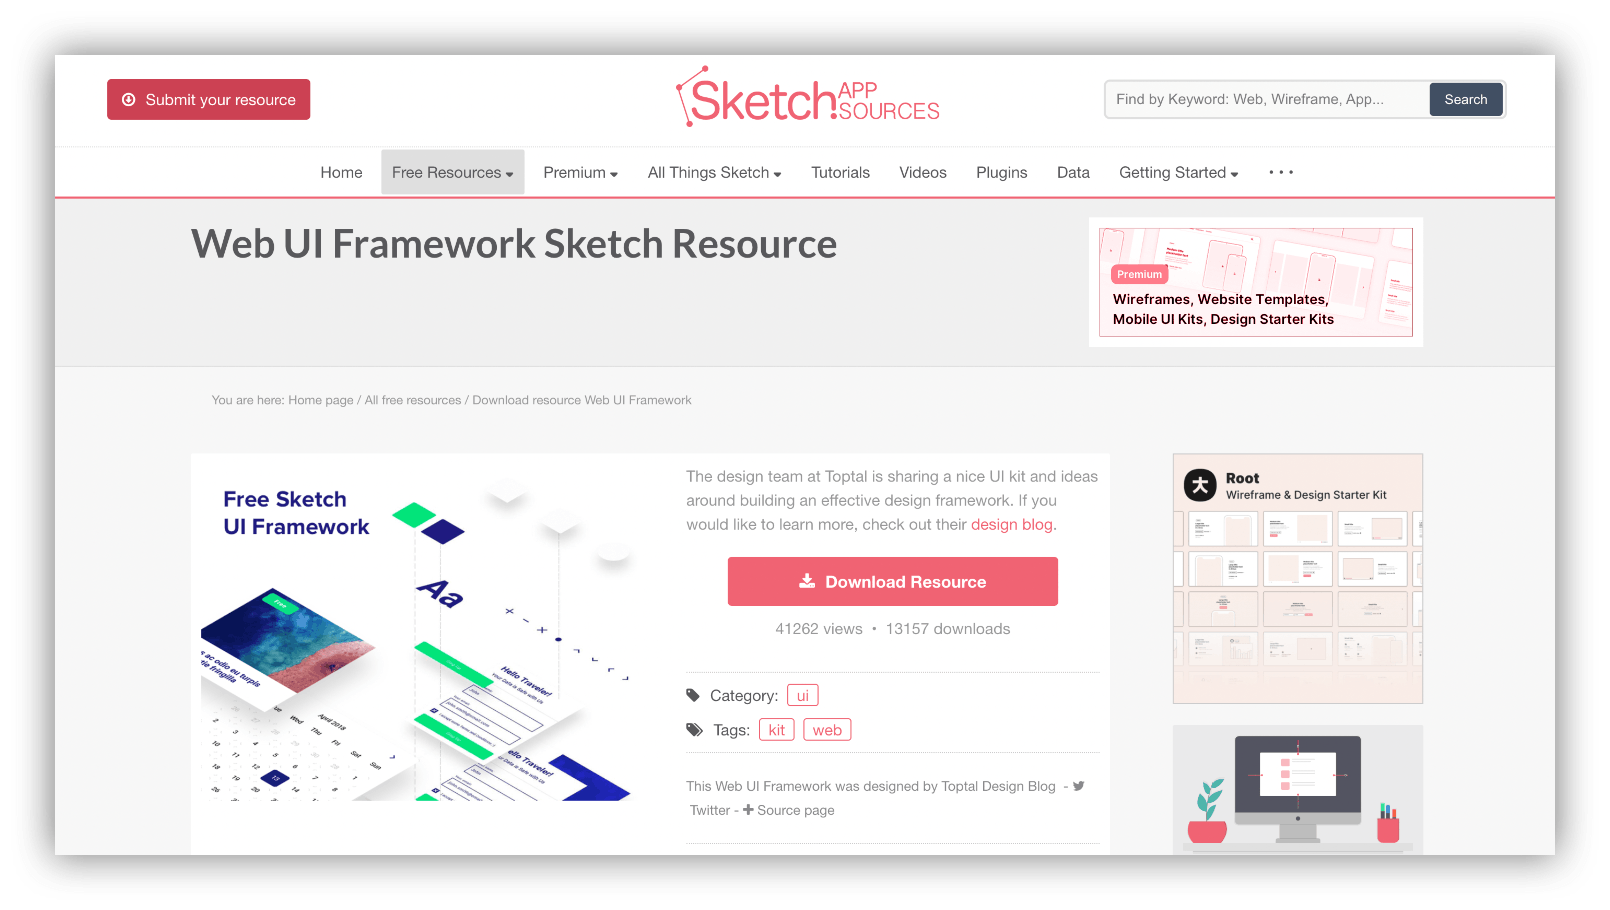 Web UI framework Sketch resource home page